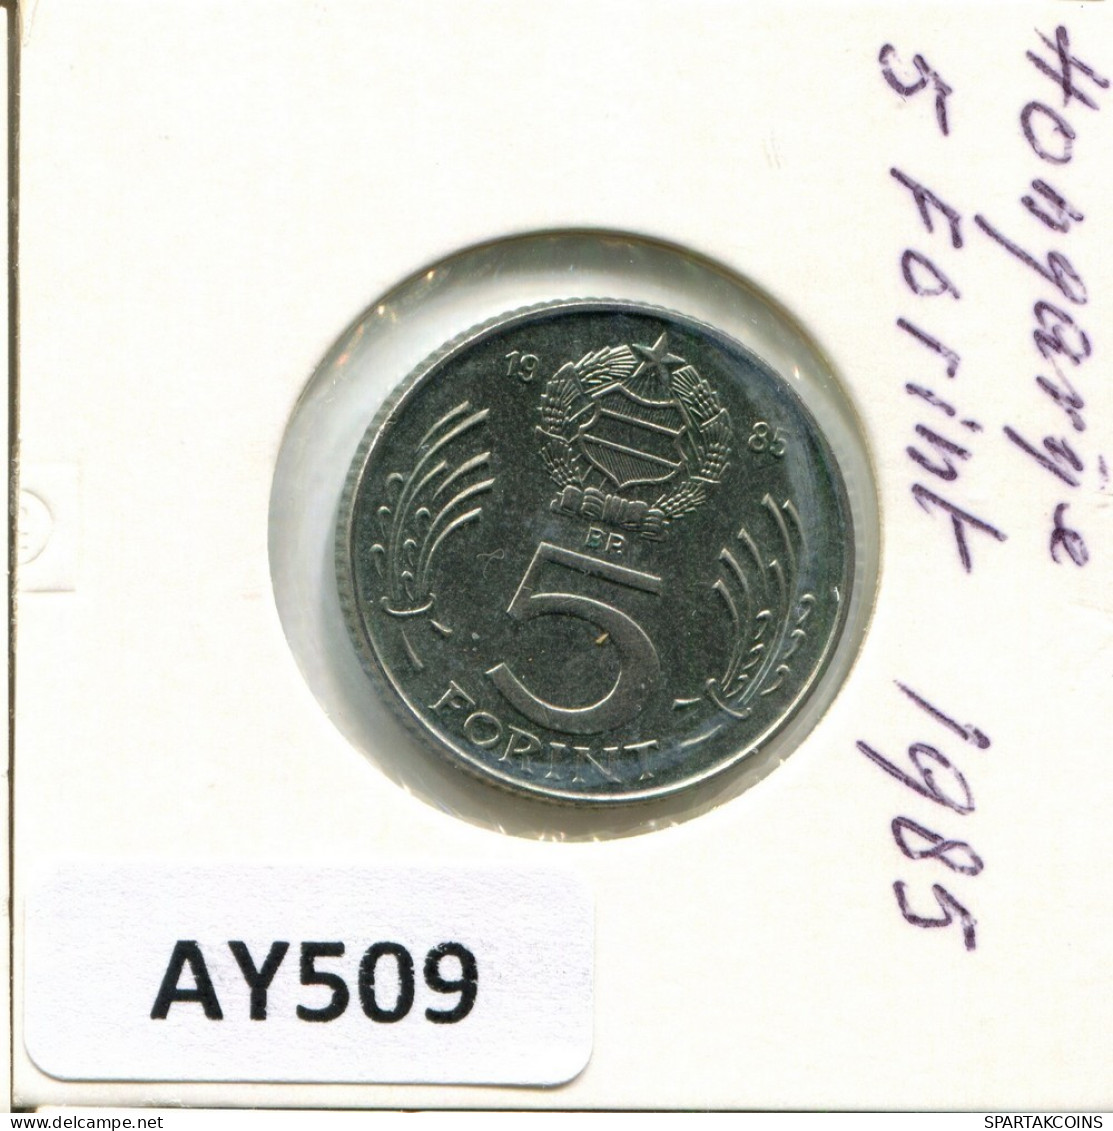 5 FORINT 1985 HUNGARY Coin #AY509.U.A - Hungary